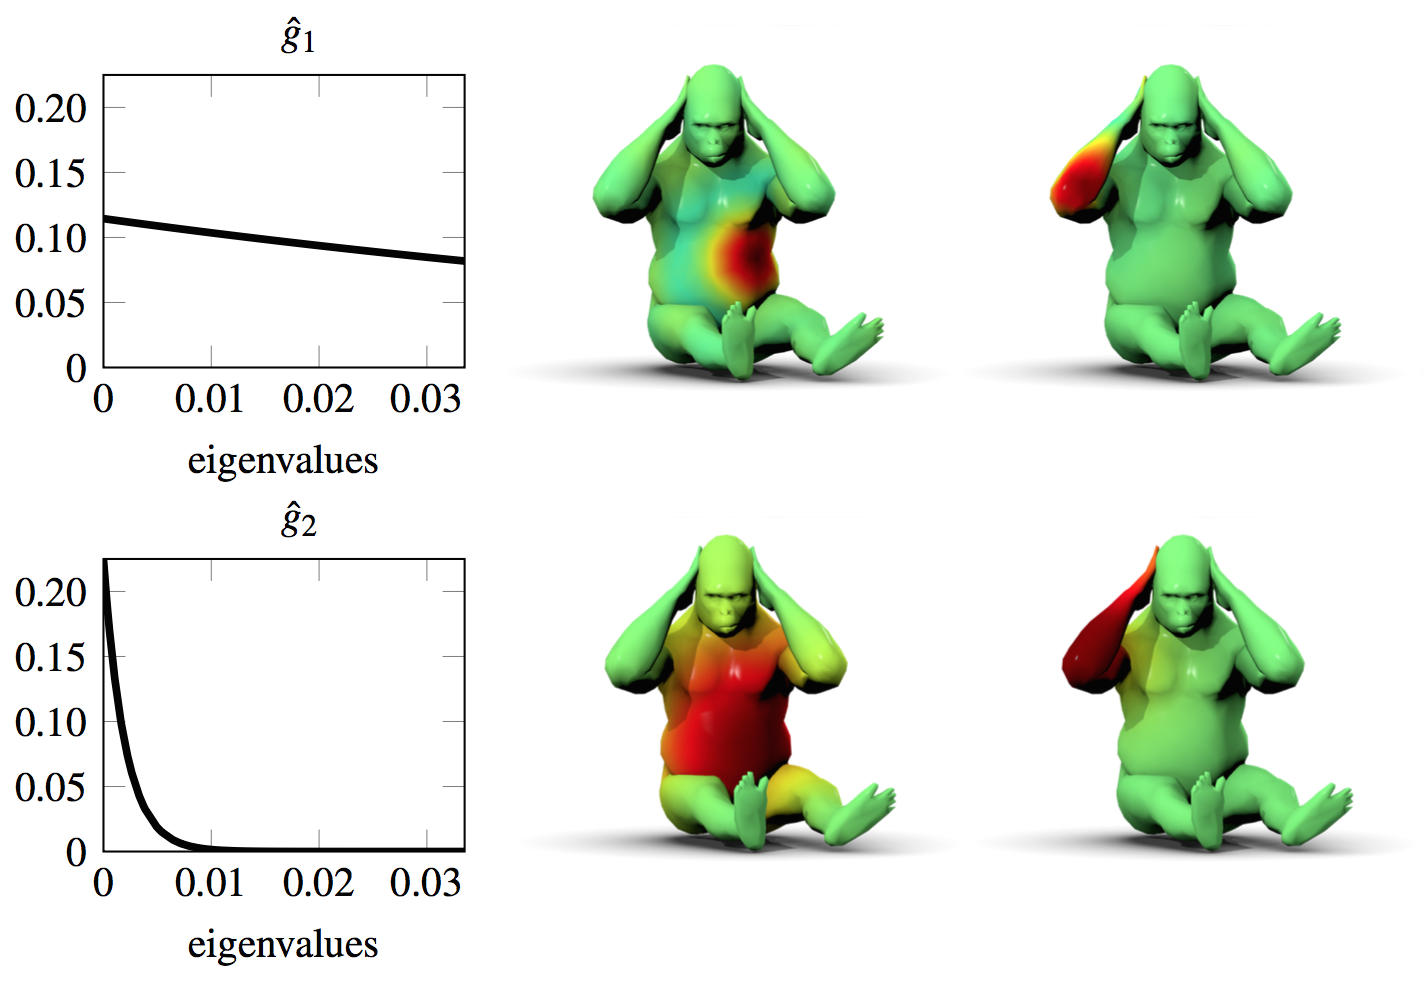 Windowed Fourier atoms on gorilla shape